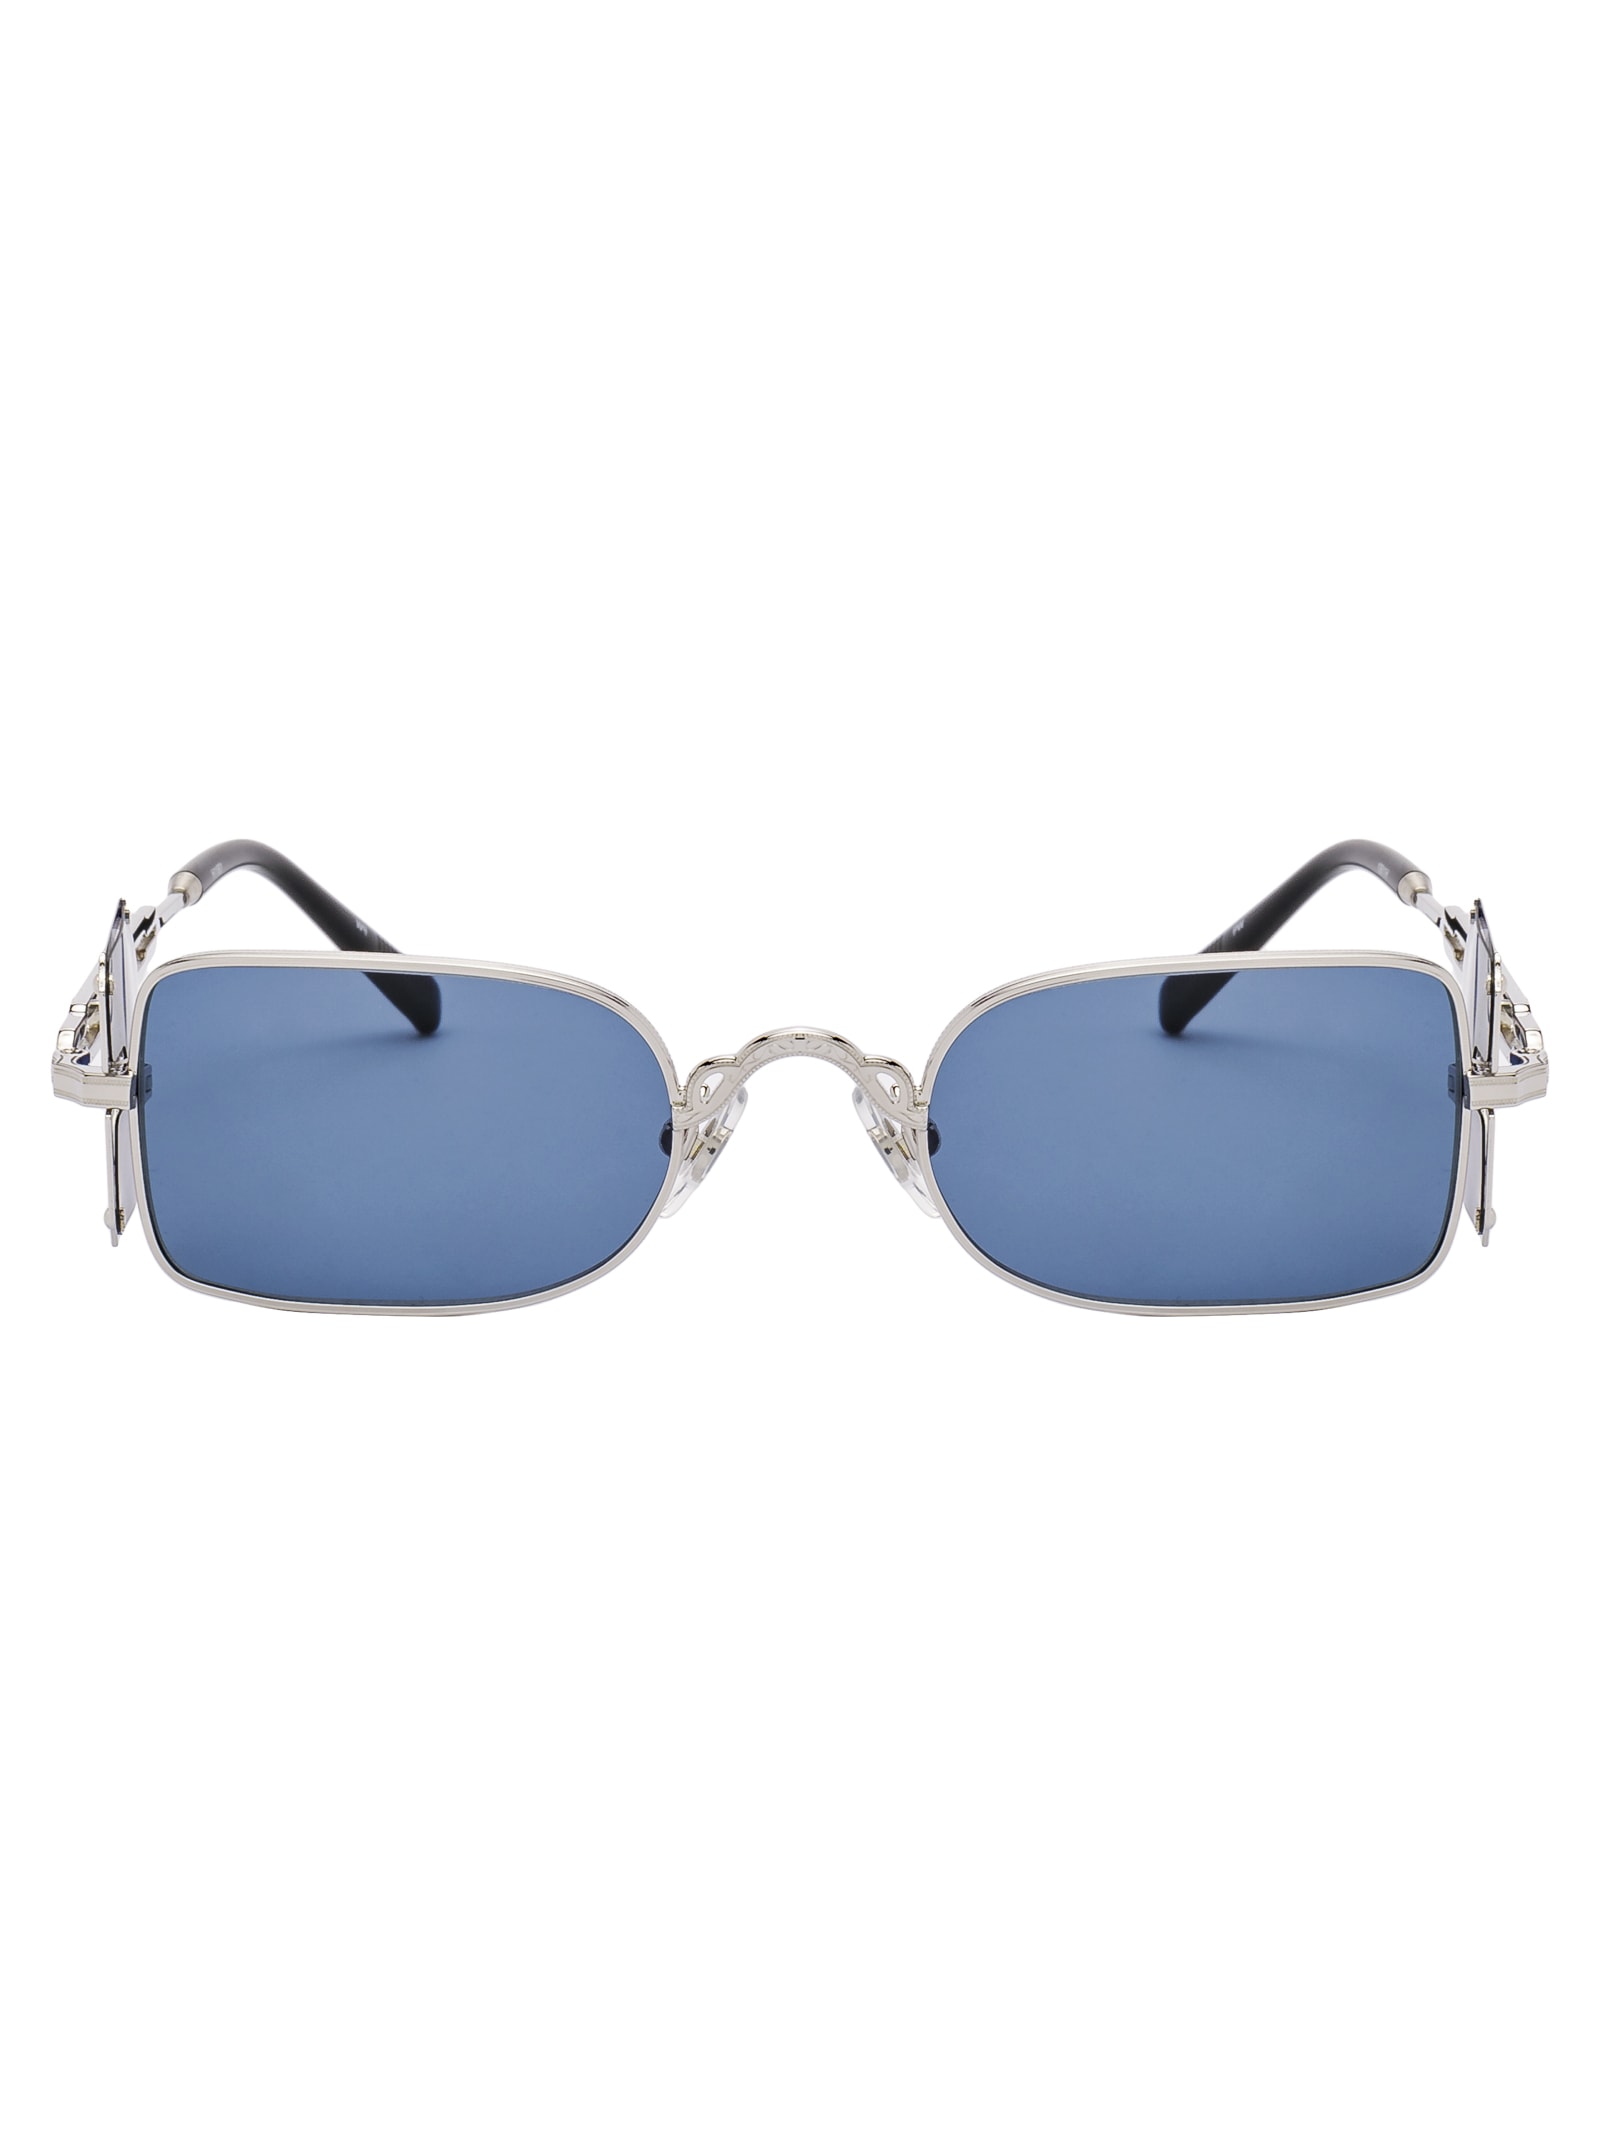 Matsuda 10611h Sunglasses